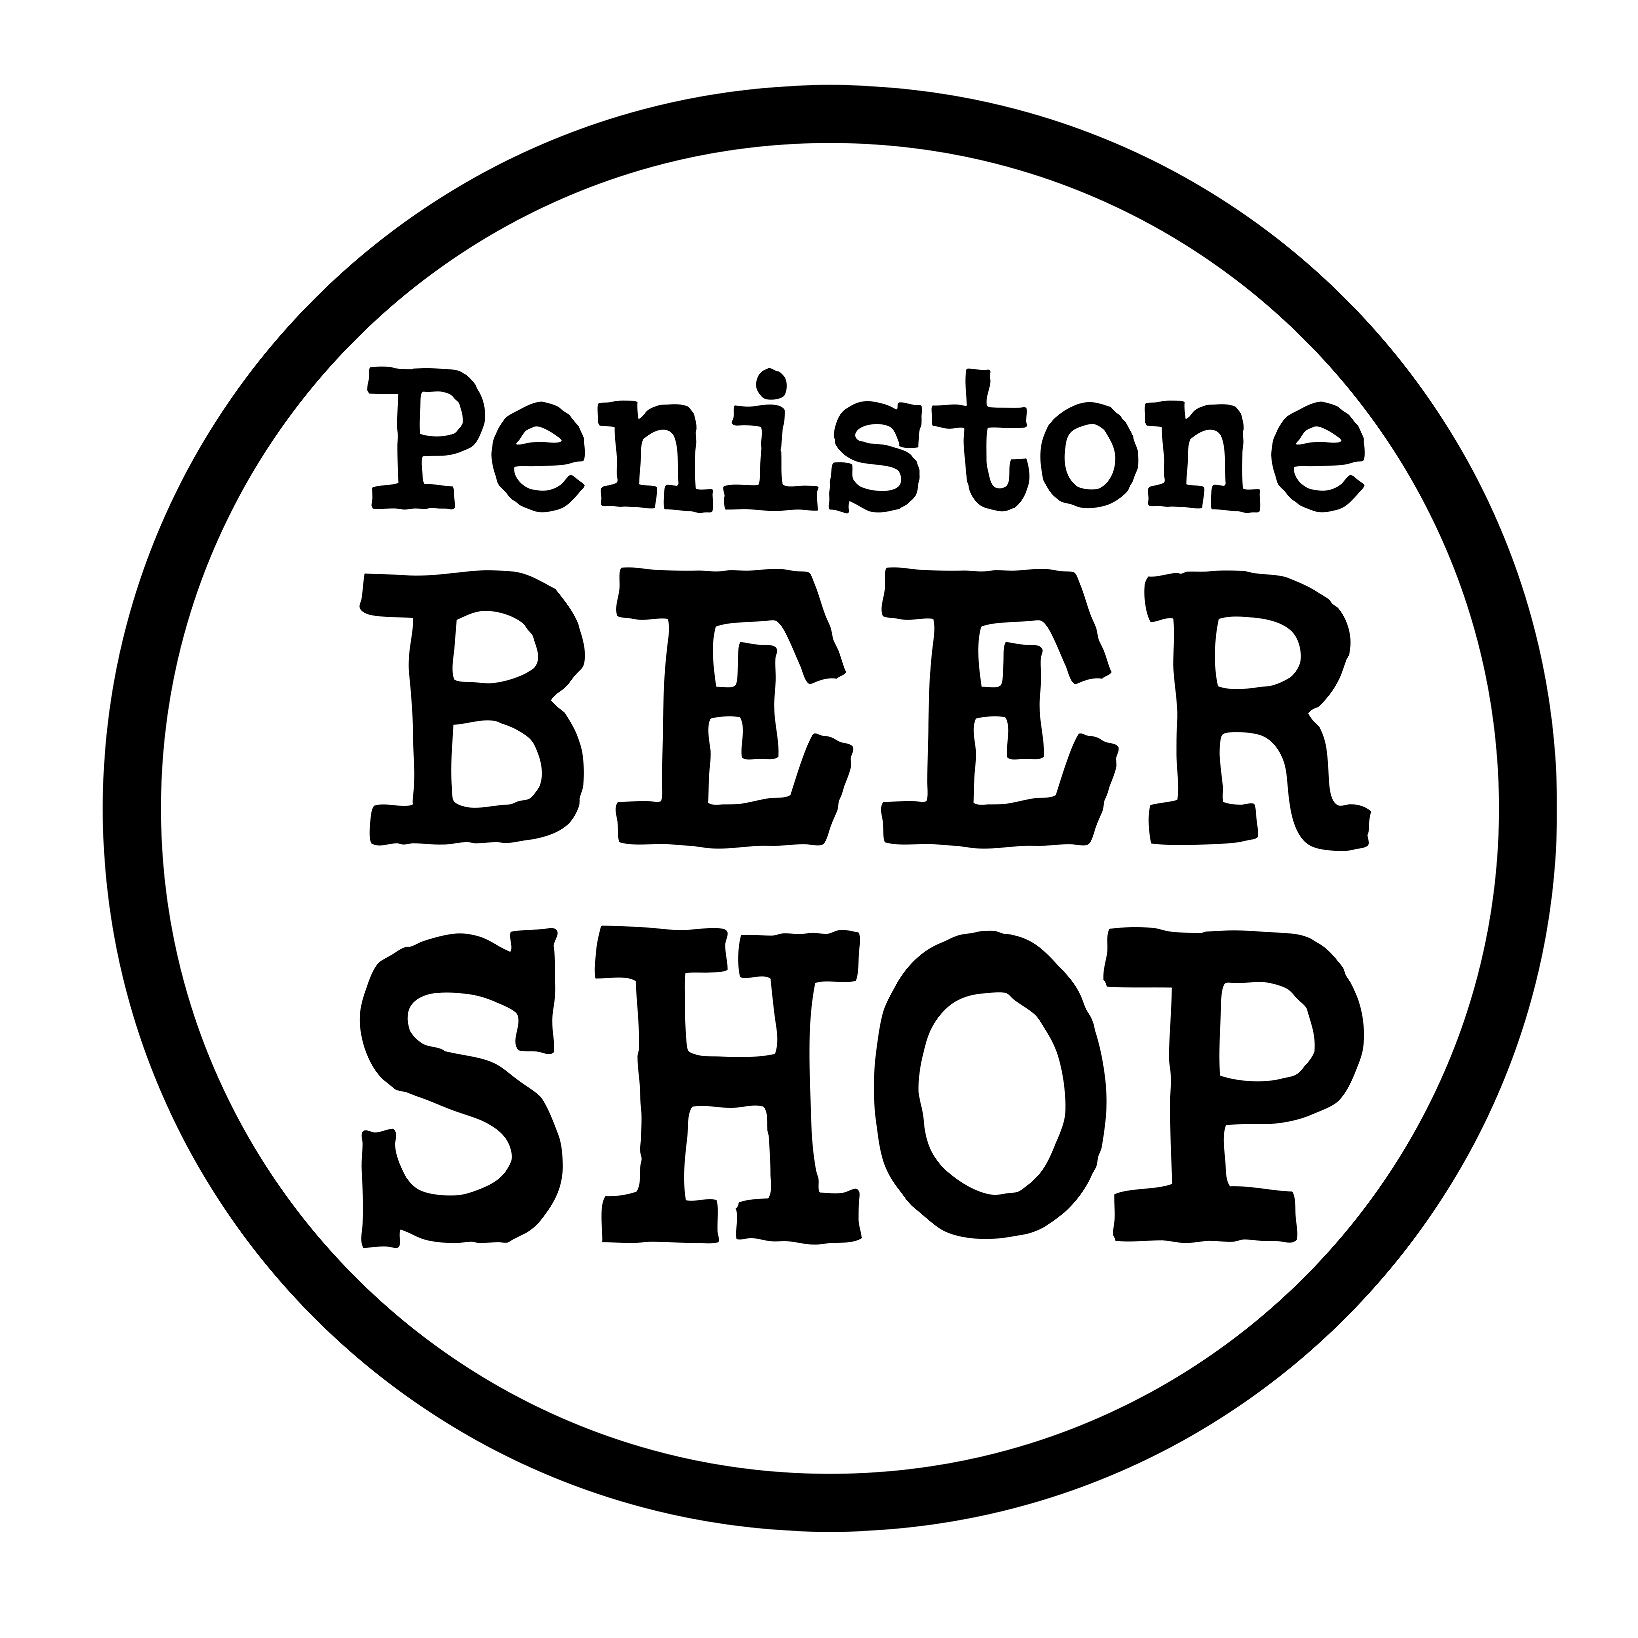 Penistone Beer Shop